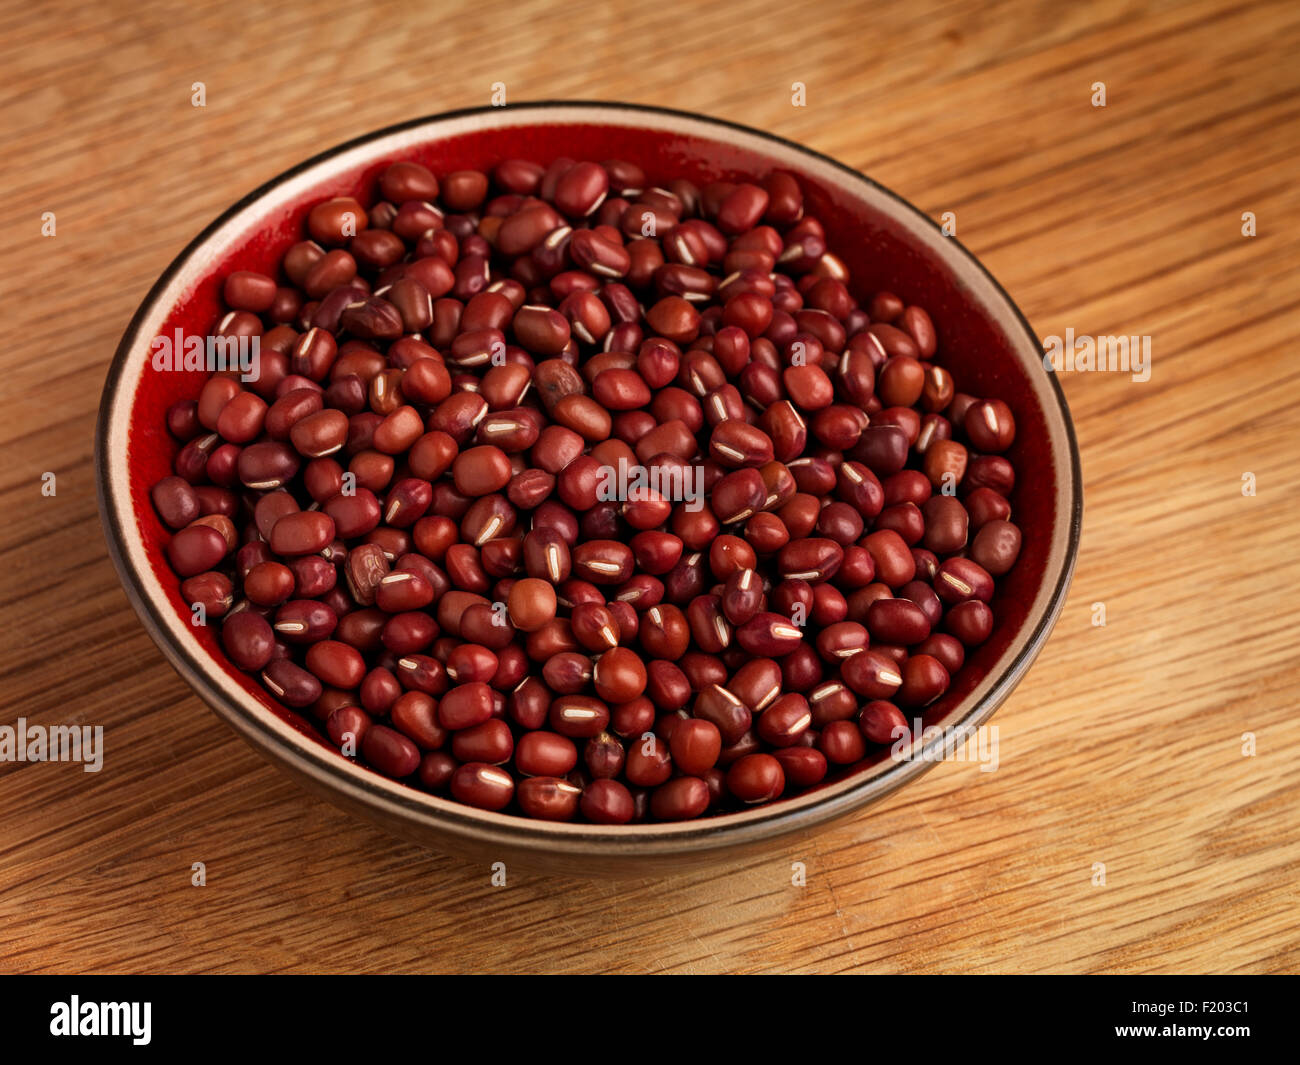 Adzuki Beans in bowl Stock Photo